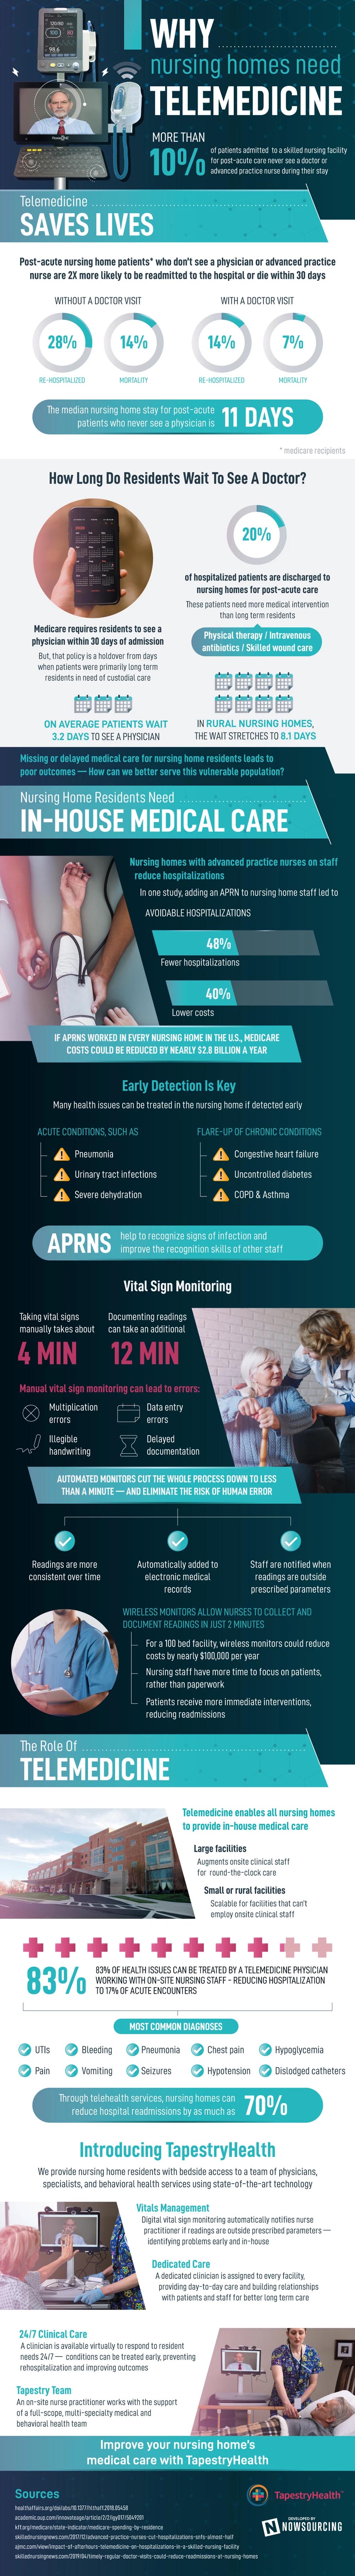 Why Nursing Homes Need Telemedicine